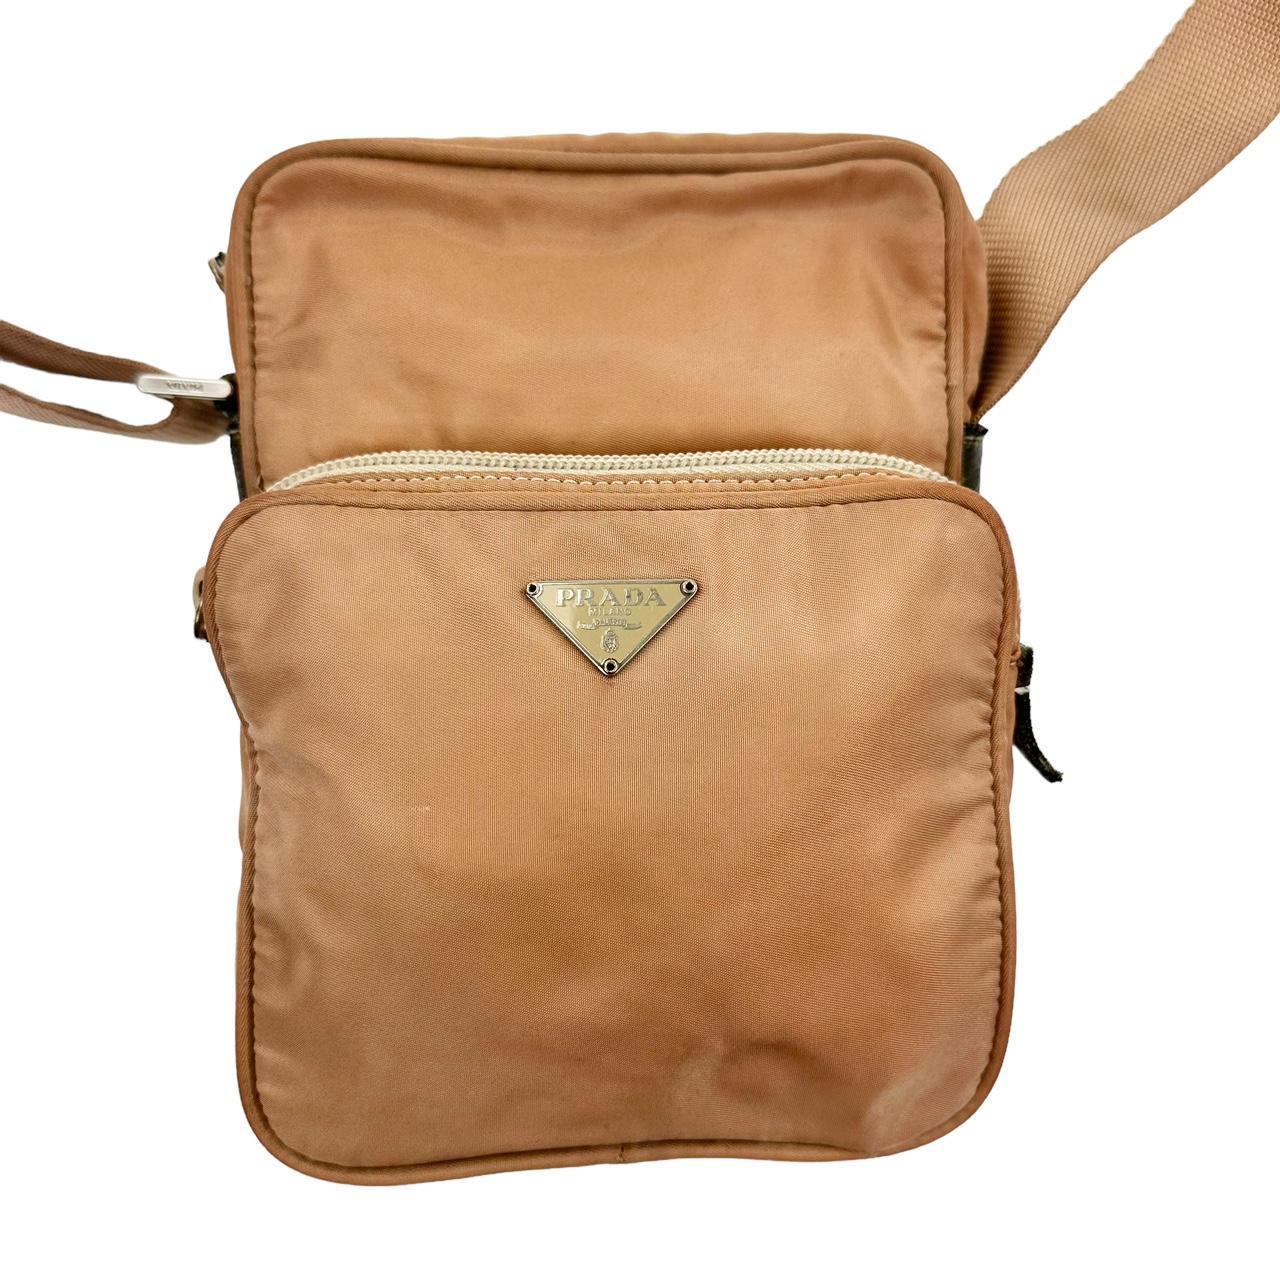 Vintage Prada nylon 3D Pocket cross body bag - Known Source